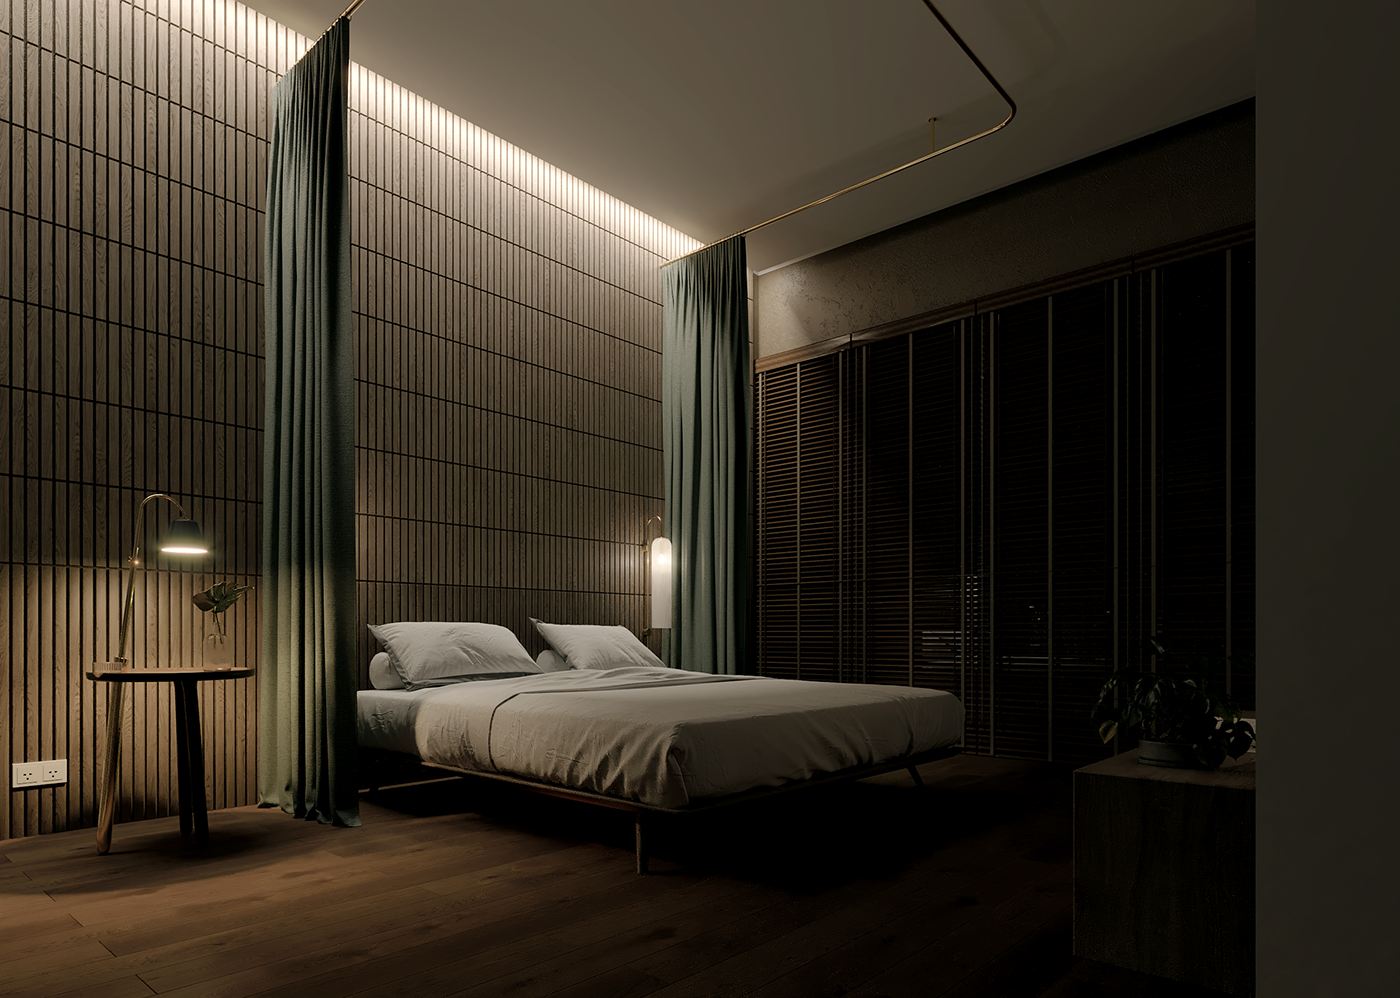 CGI bedroom interiordesign Render 3dsmax